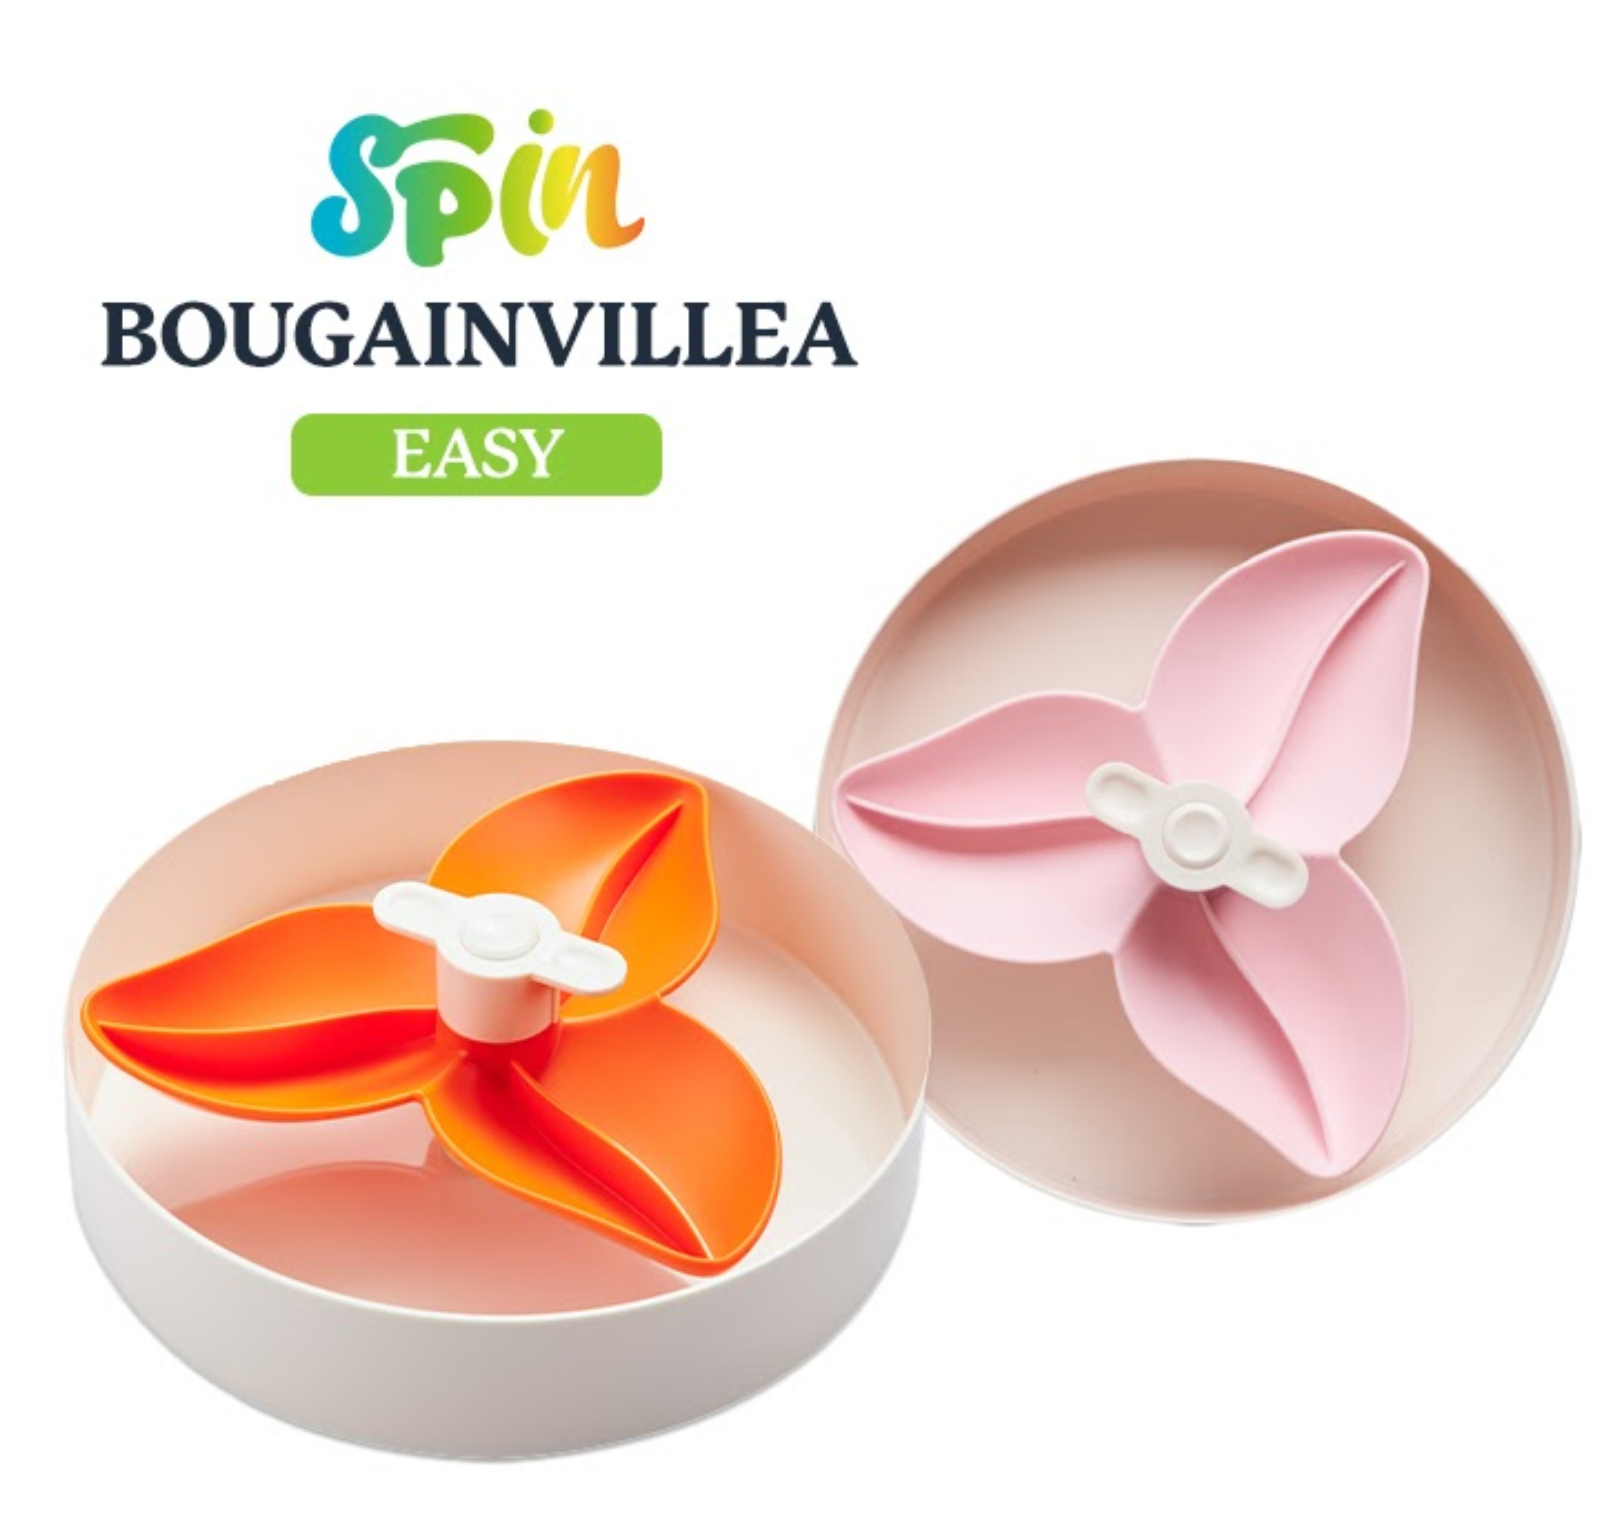 Spin Bougainvillea Interactive Slow Feeder Pet Bowl Orange